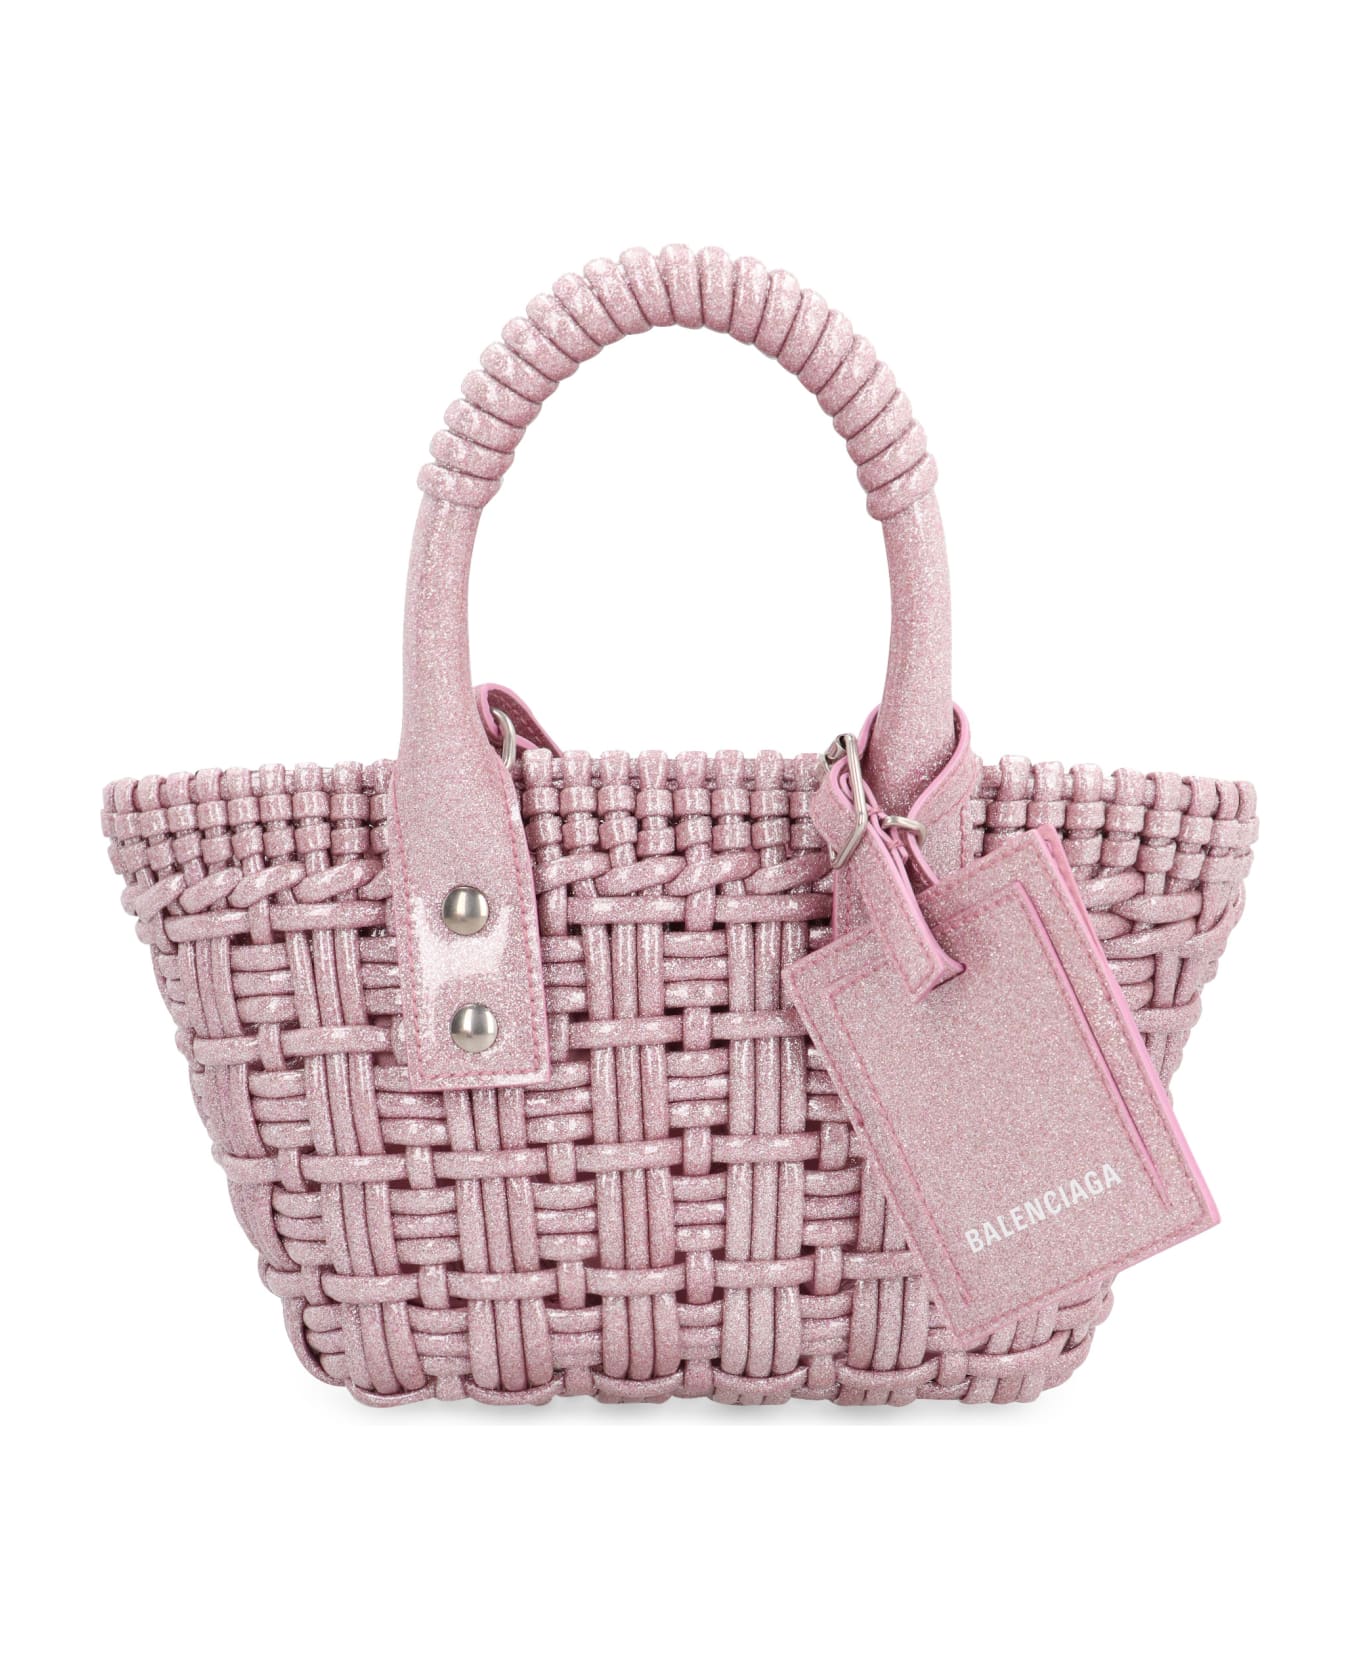 Balenciaga Bistro Xxs Basket Handbag - Pink